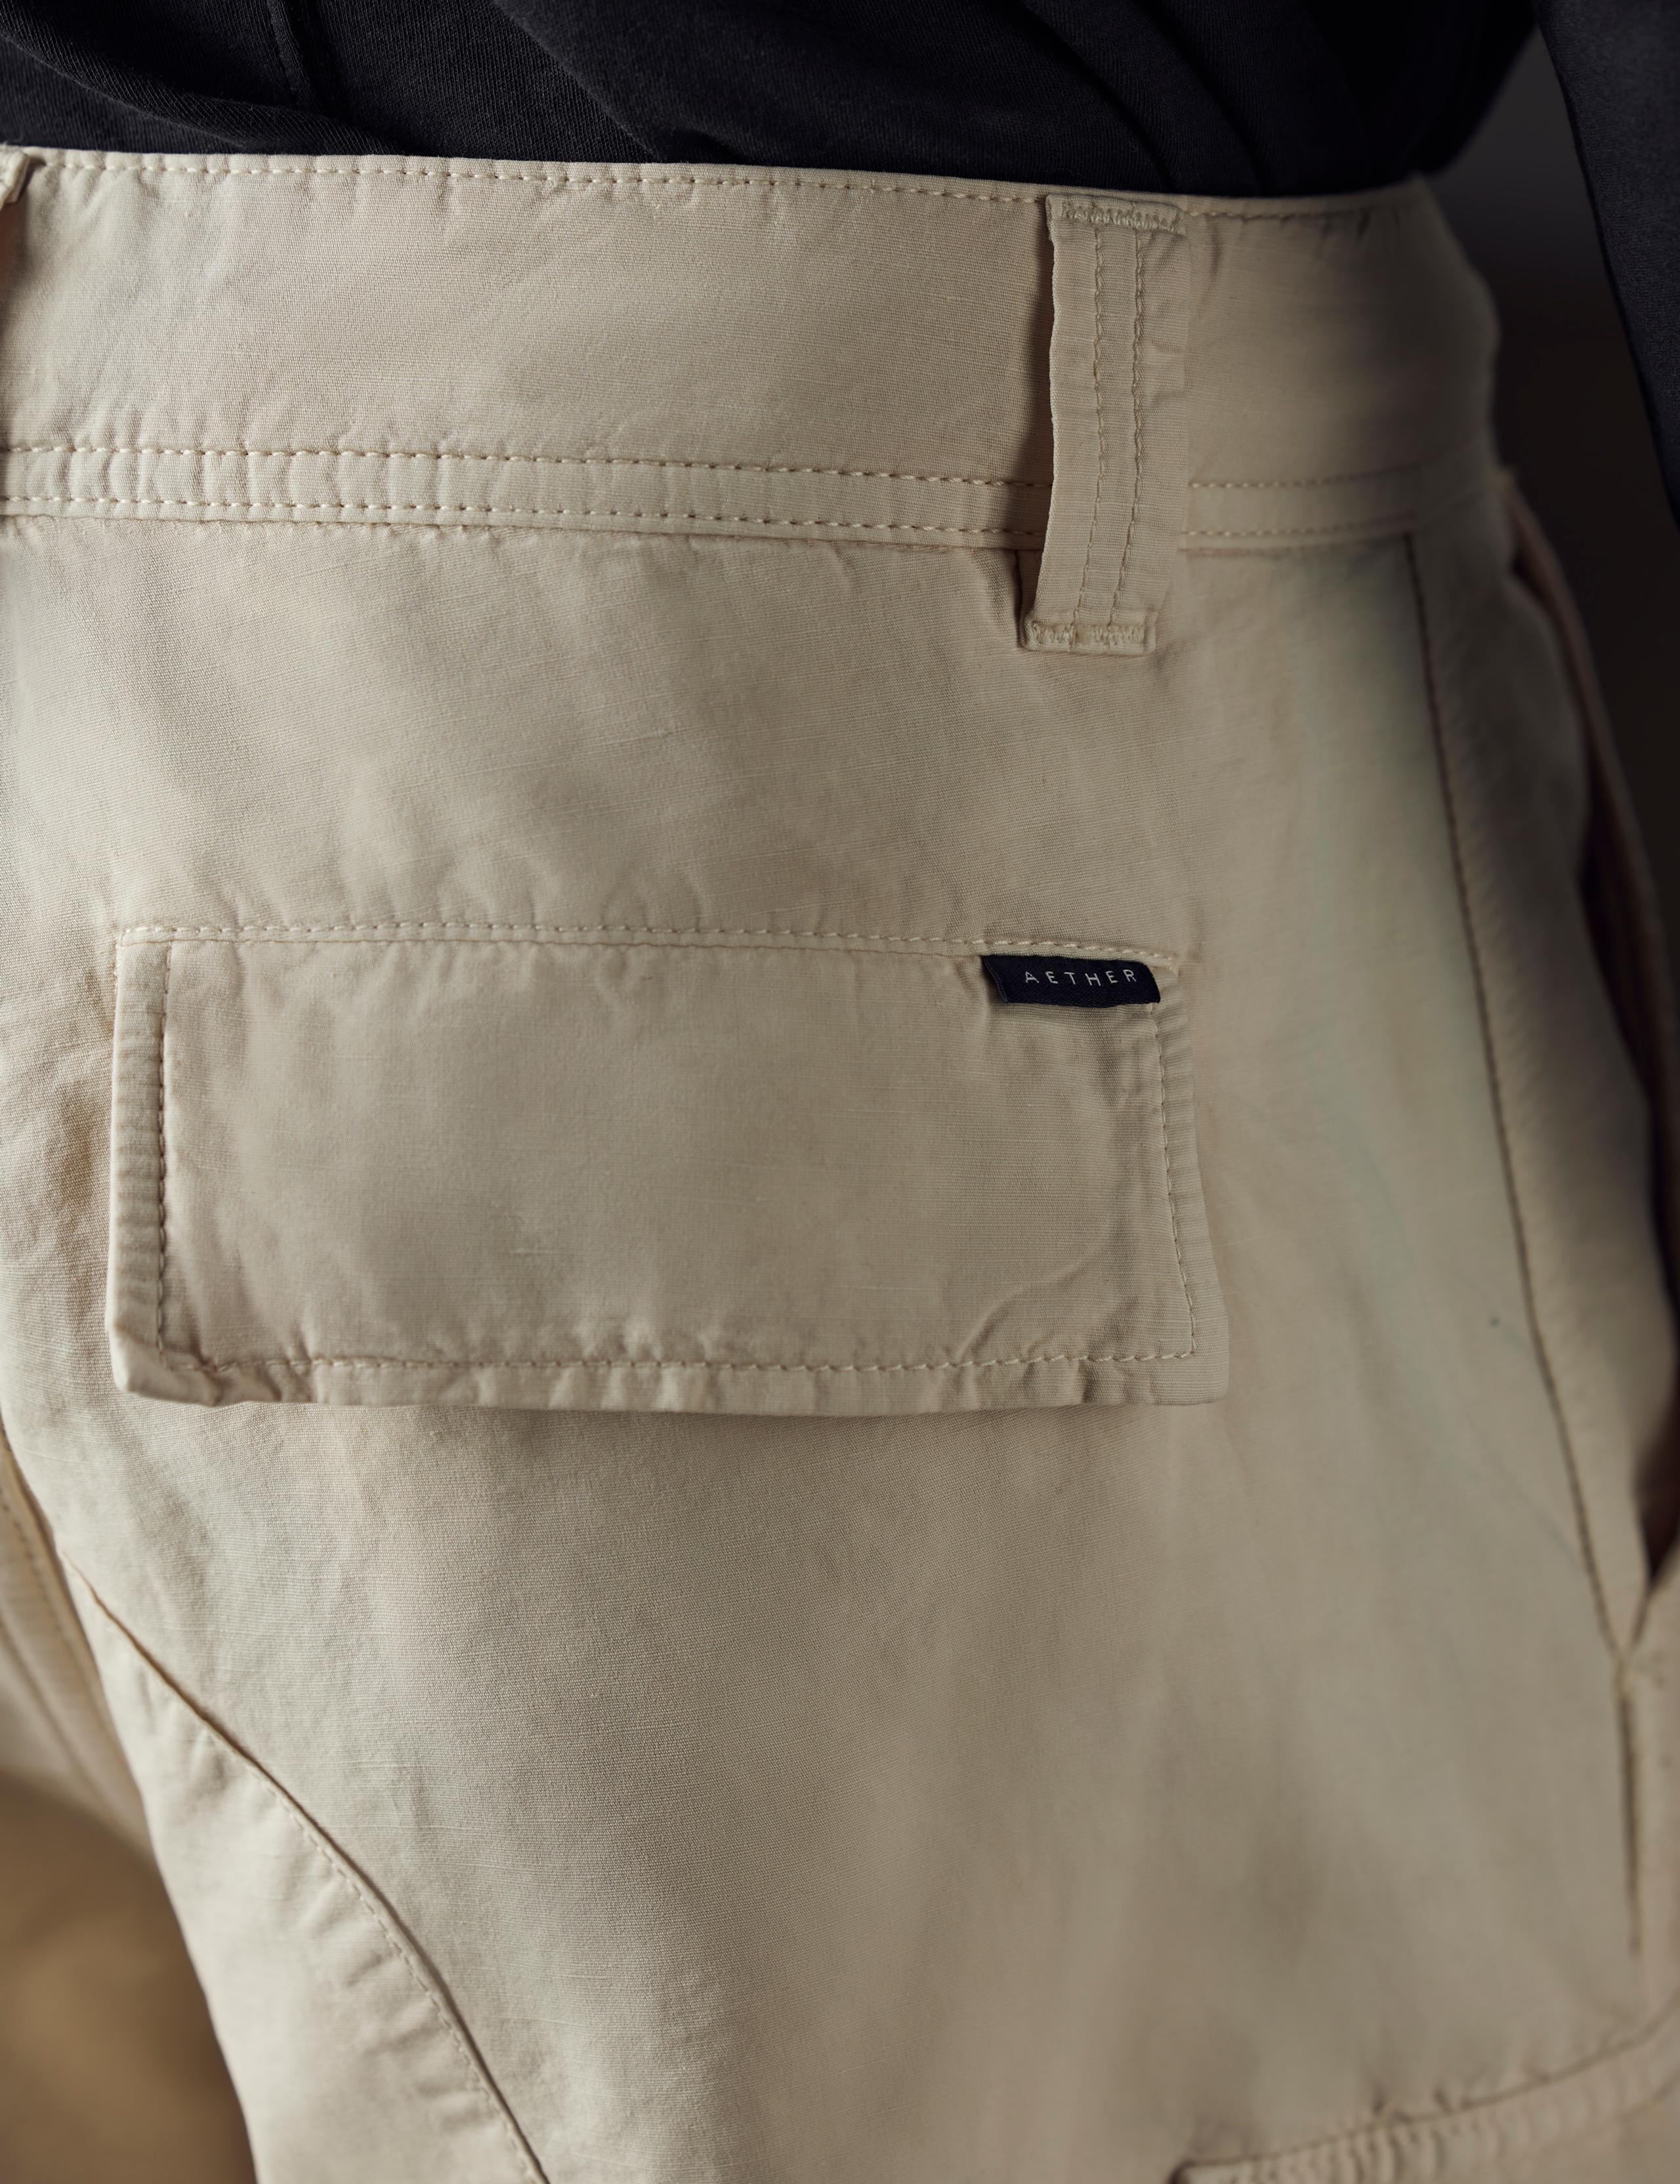 Back pockets detail of Glade Fatigue Pant.